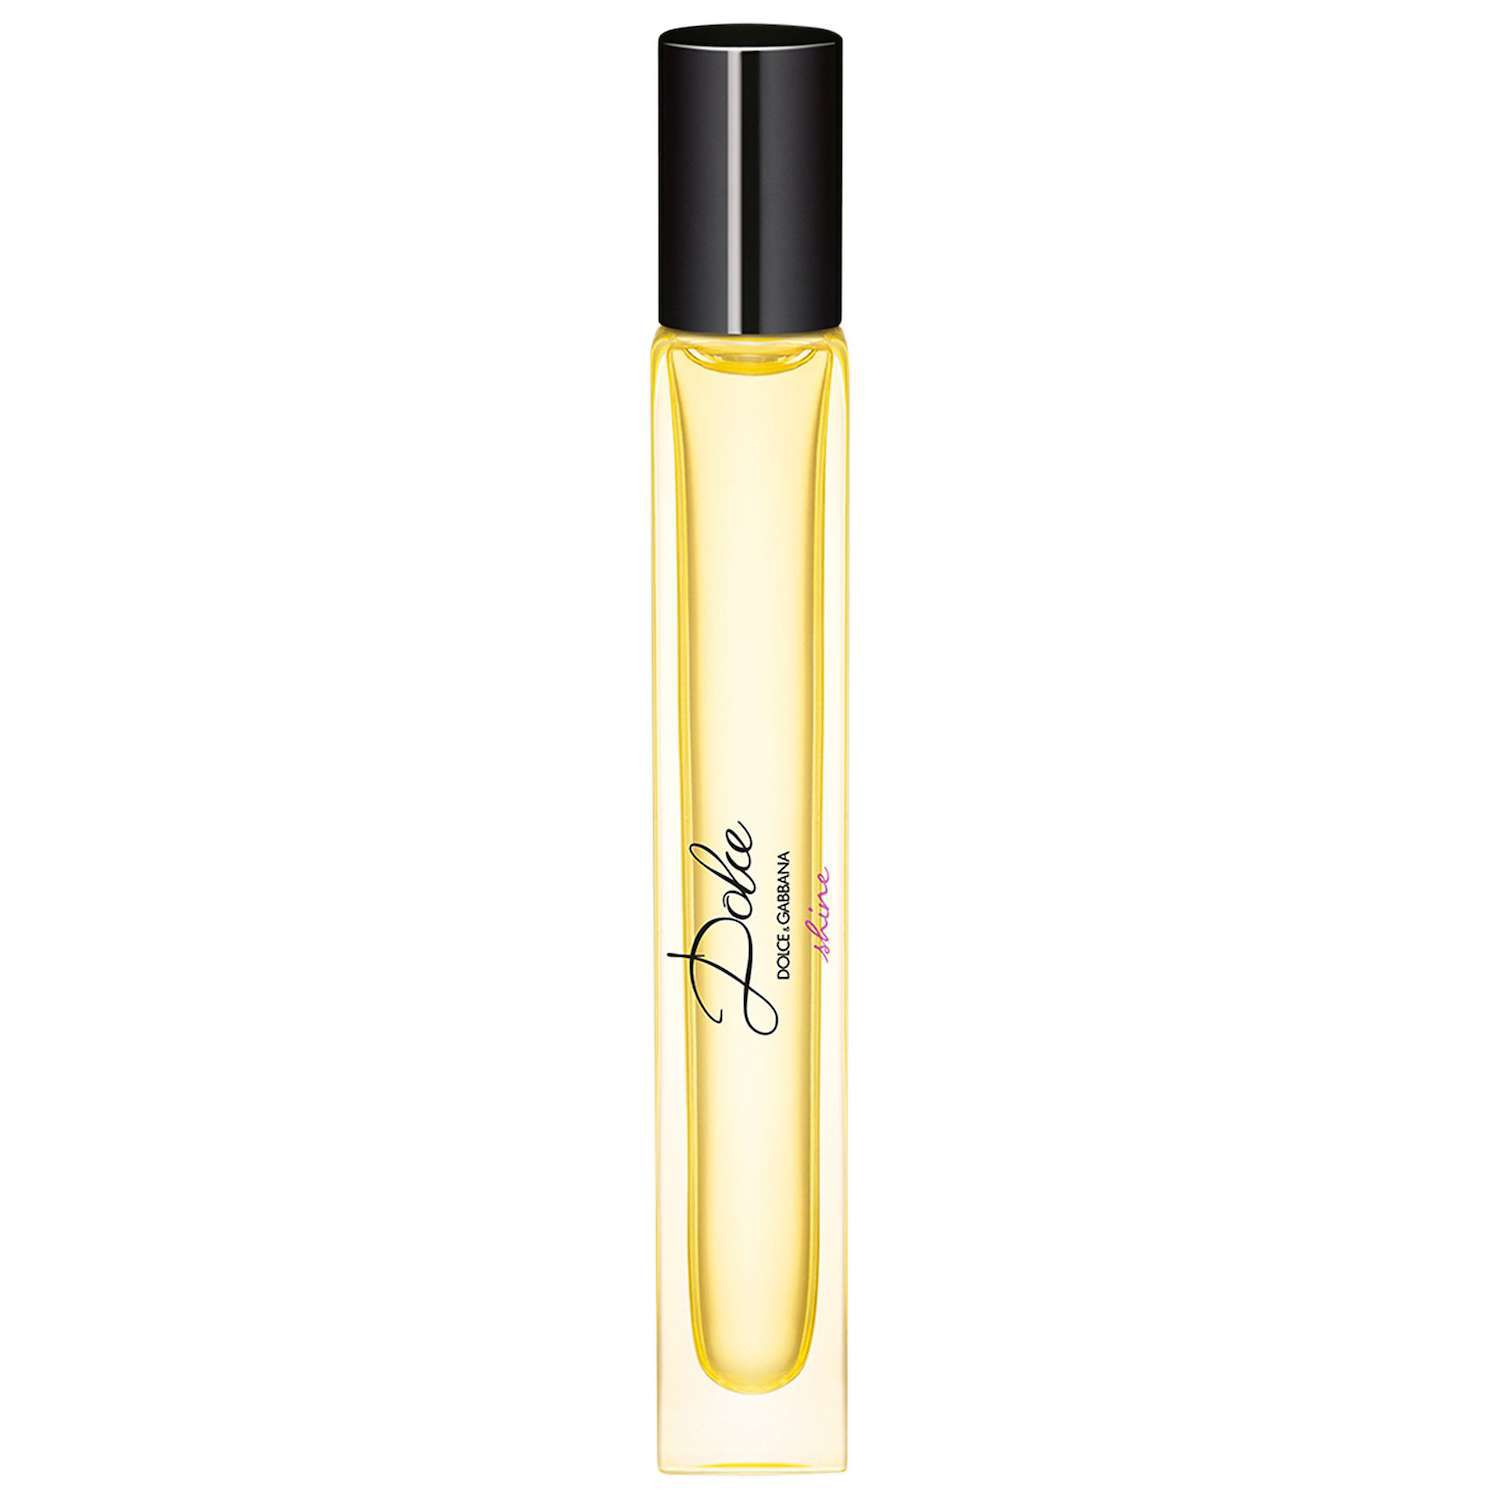 Image for DOLCE&GABBANA Dolce Shine Eau de Parfum Travel Spray at Kohl's.